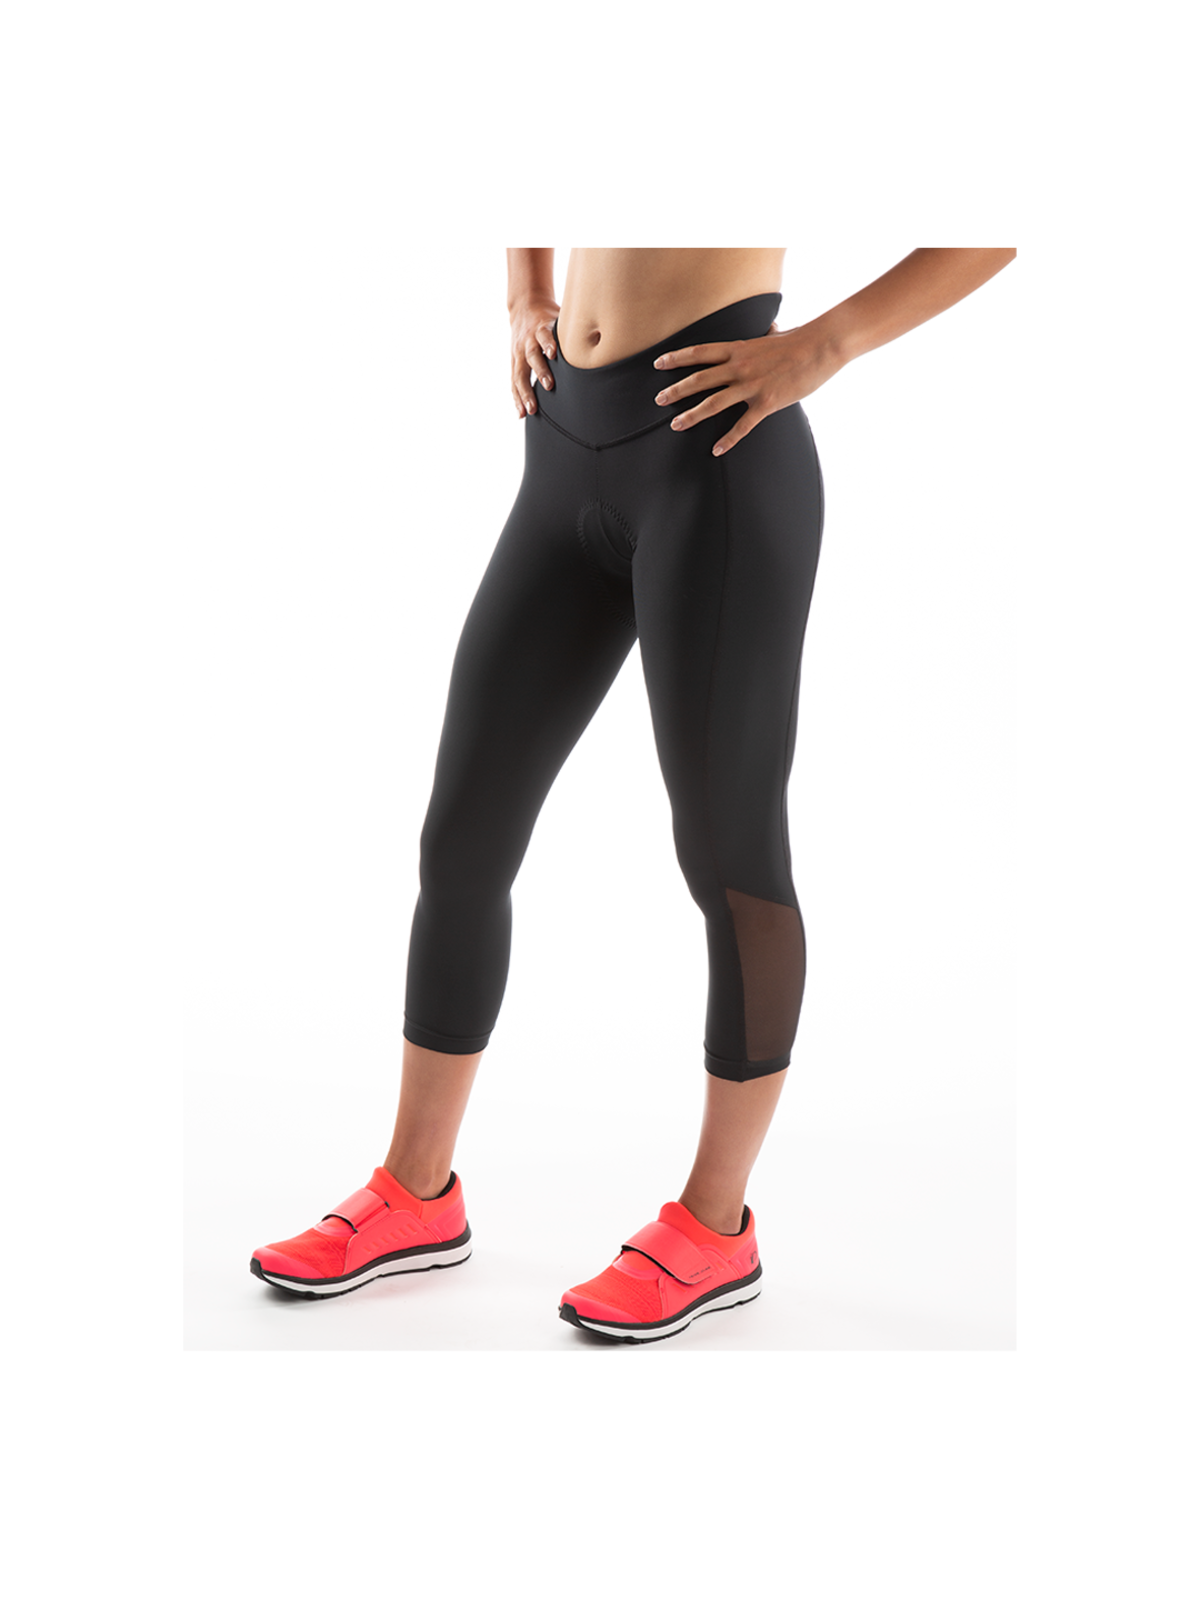 Sugar Pocket Womens capri Tights Sport Workout Trousers Yoga Pants